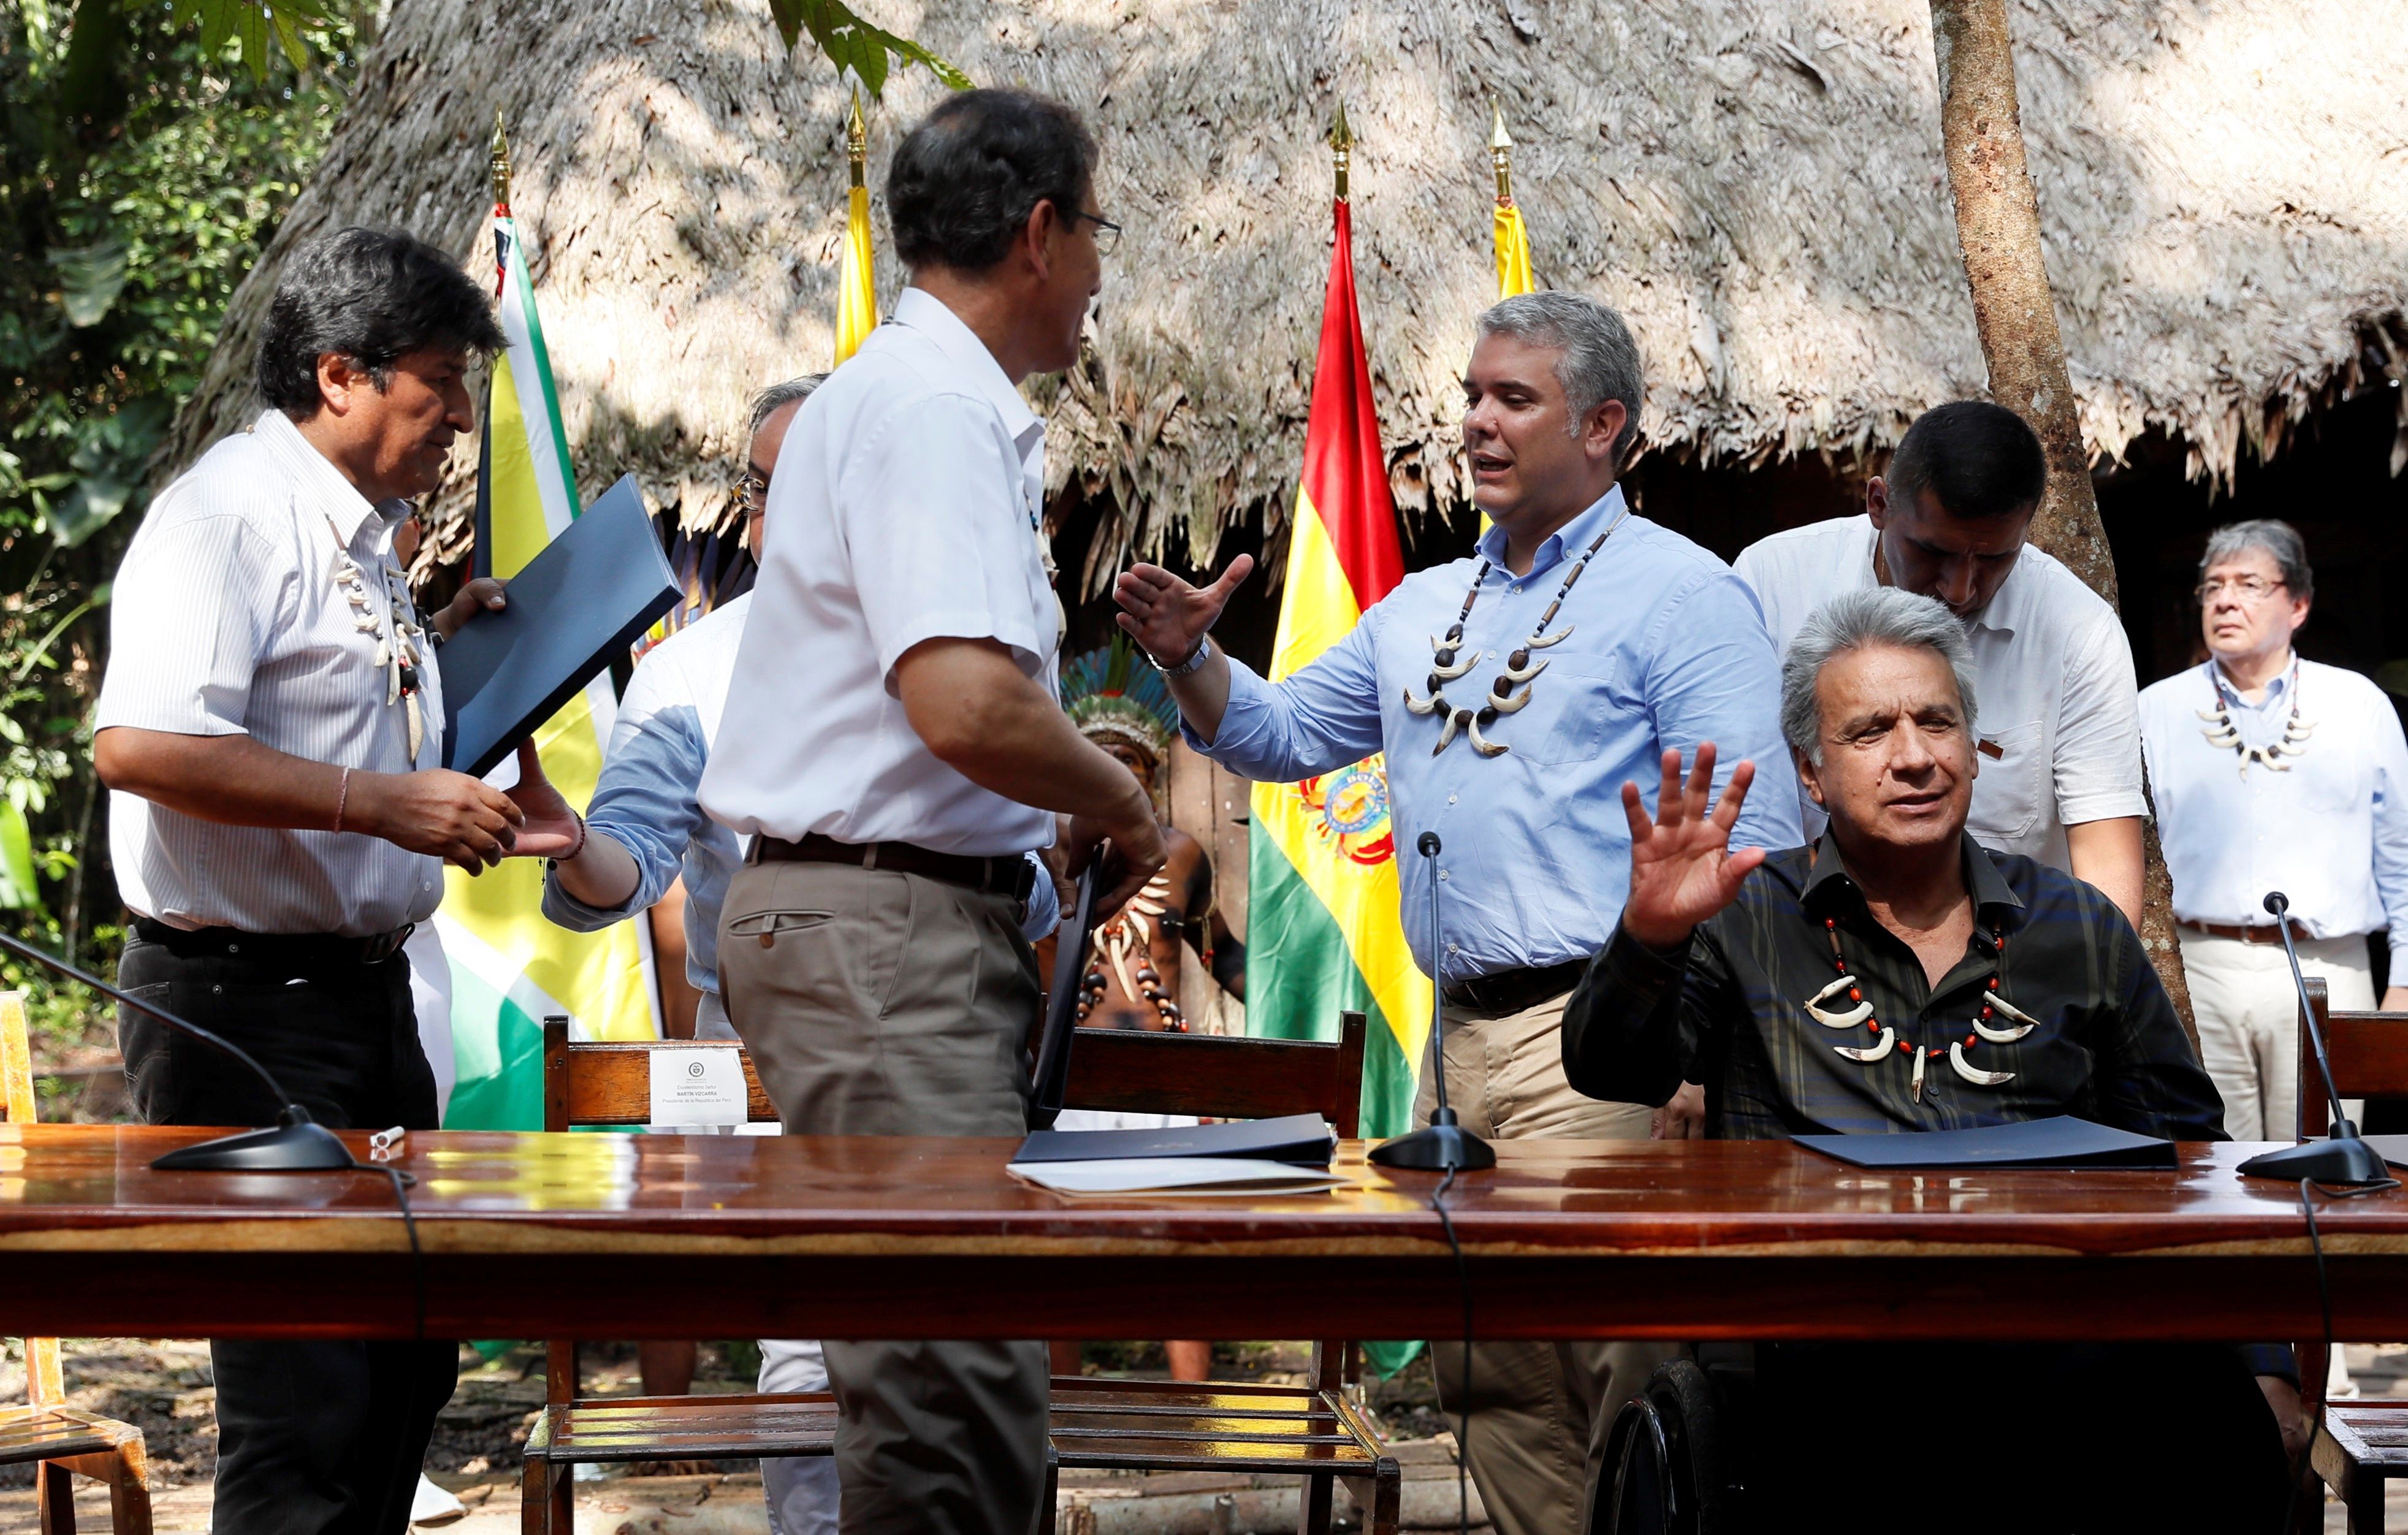 Video | Ecuador's president Moreno sings in Catalan at summit to save the Amazon